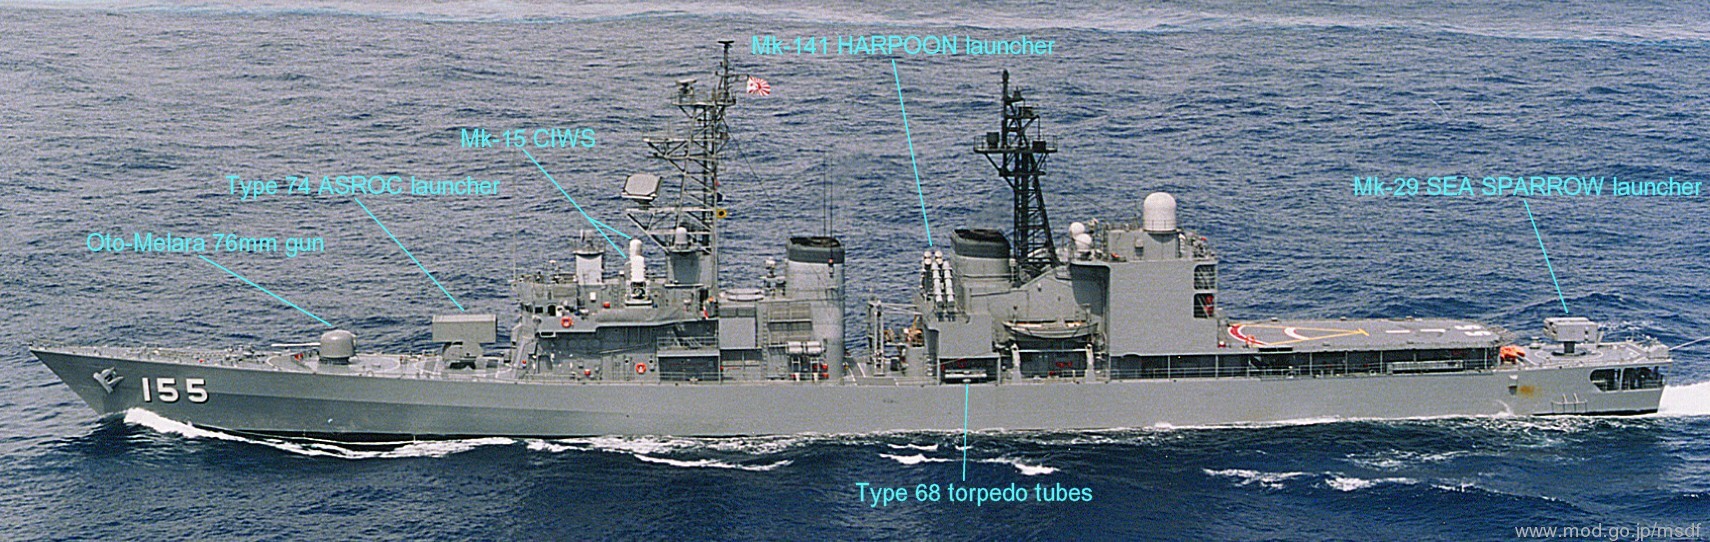 asagiri class destroyer jmsdf armament oto melara 76/62 gun type-74 asroc rur-5 mk-15 ciws mk-141 rgm-84 harpoon ssm mk-29 missile launcher rim-7 sea sparrow sam torpedo tubes type-68 mk.32 002